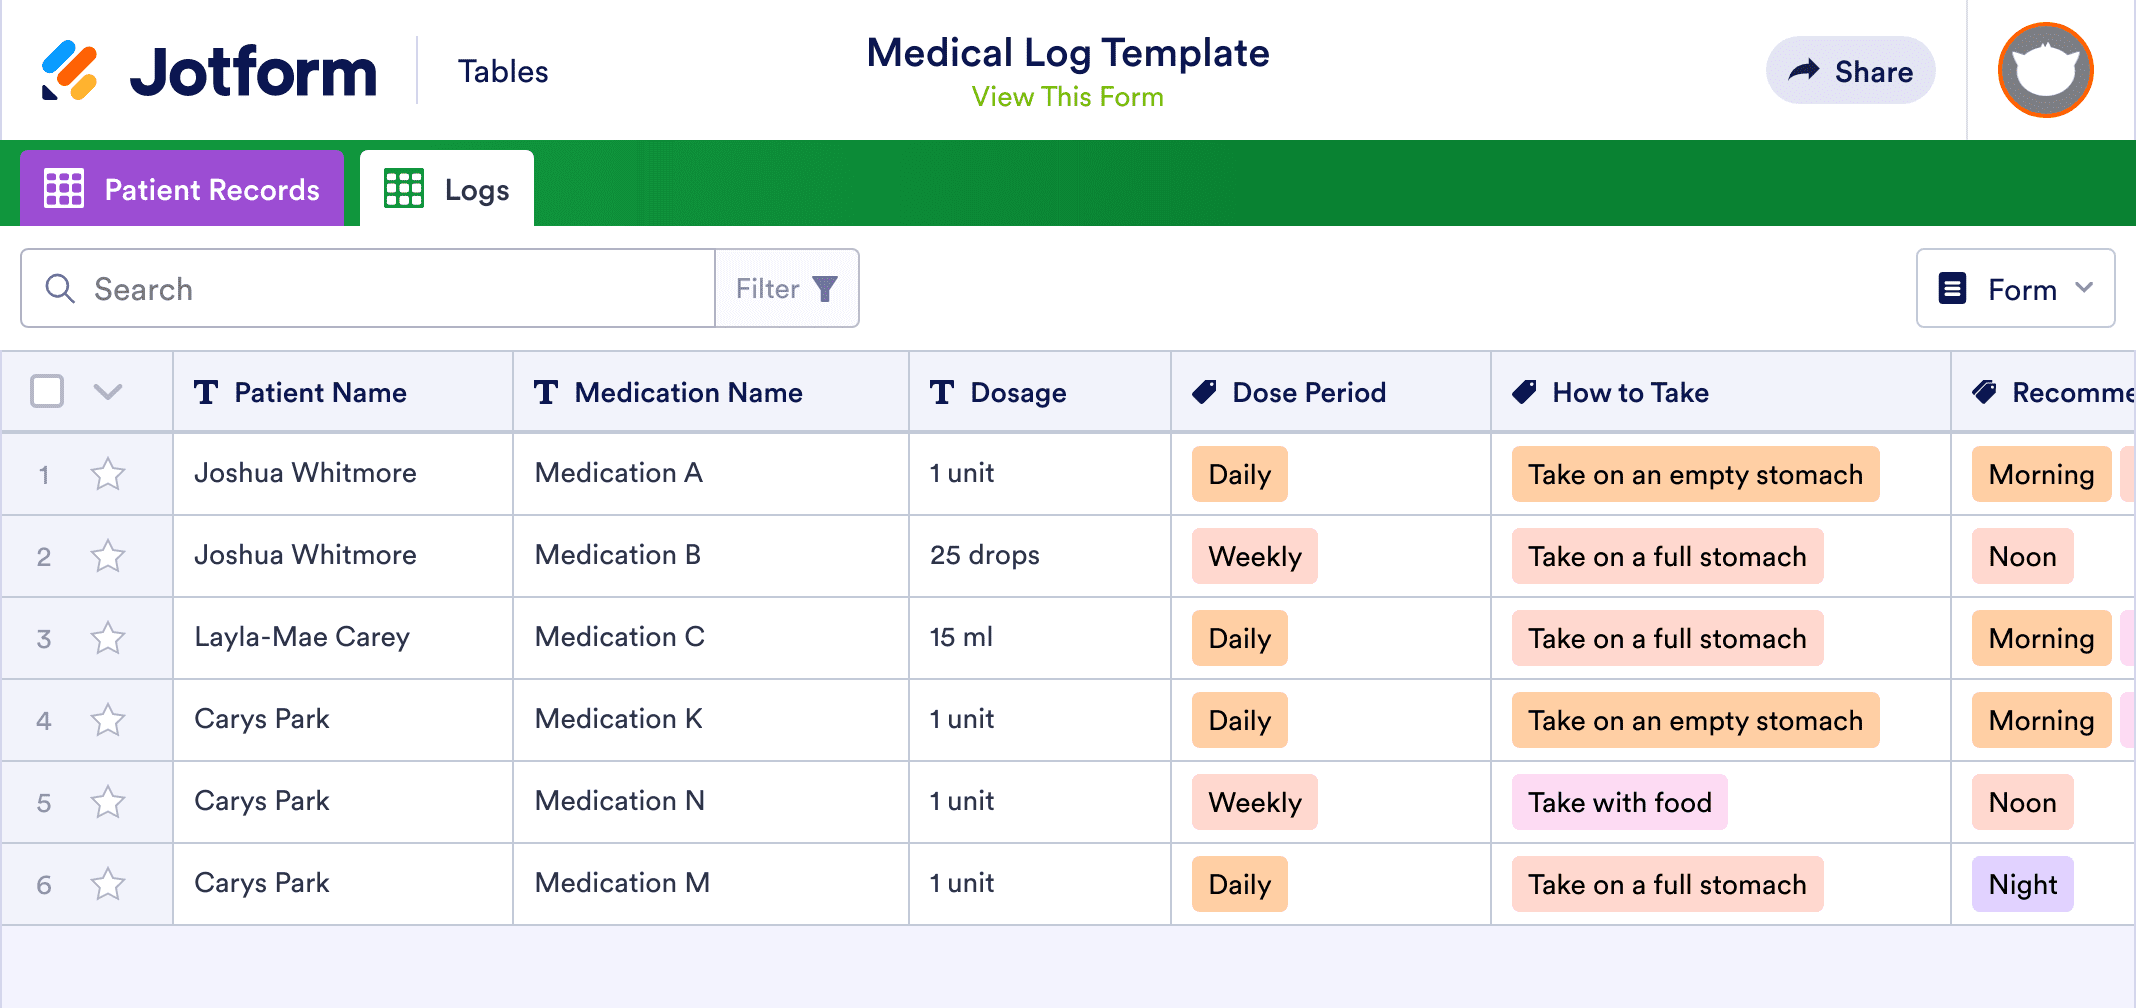 Medical Log Template